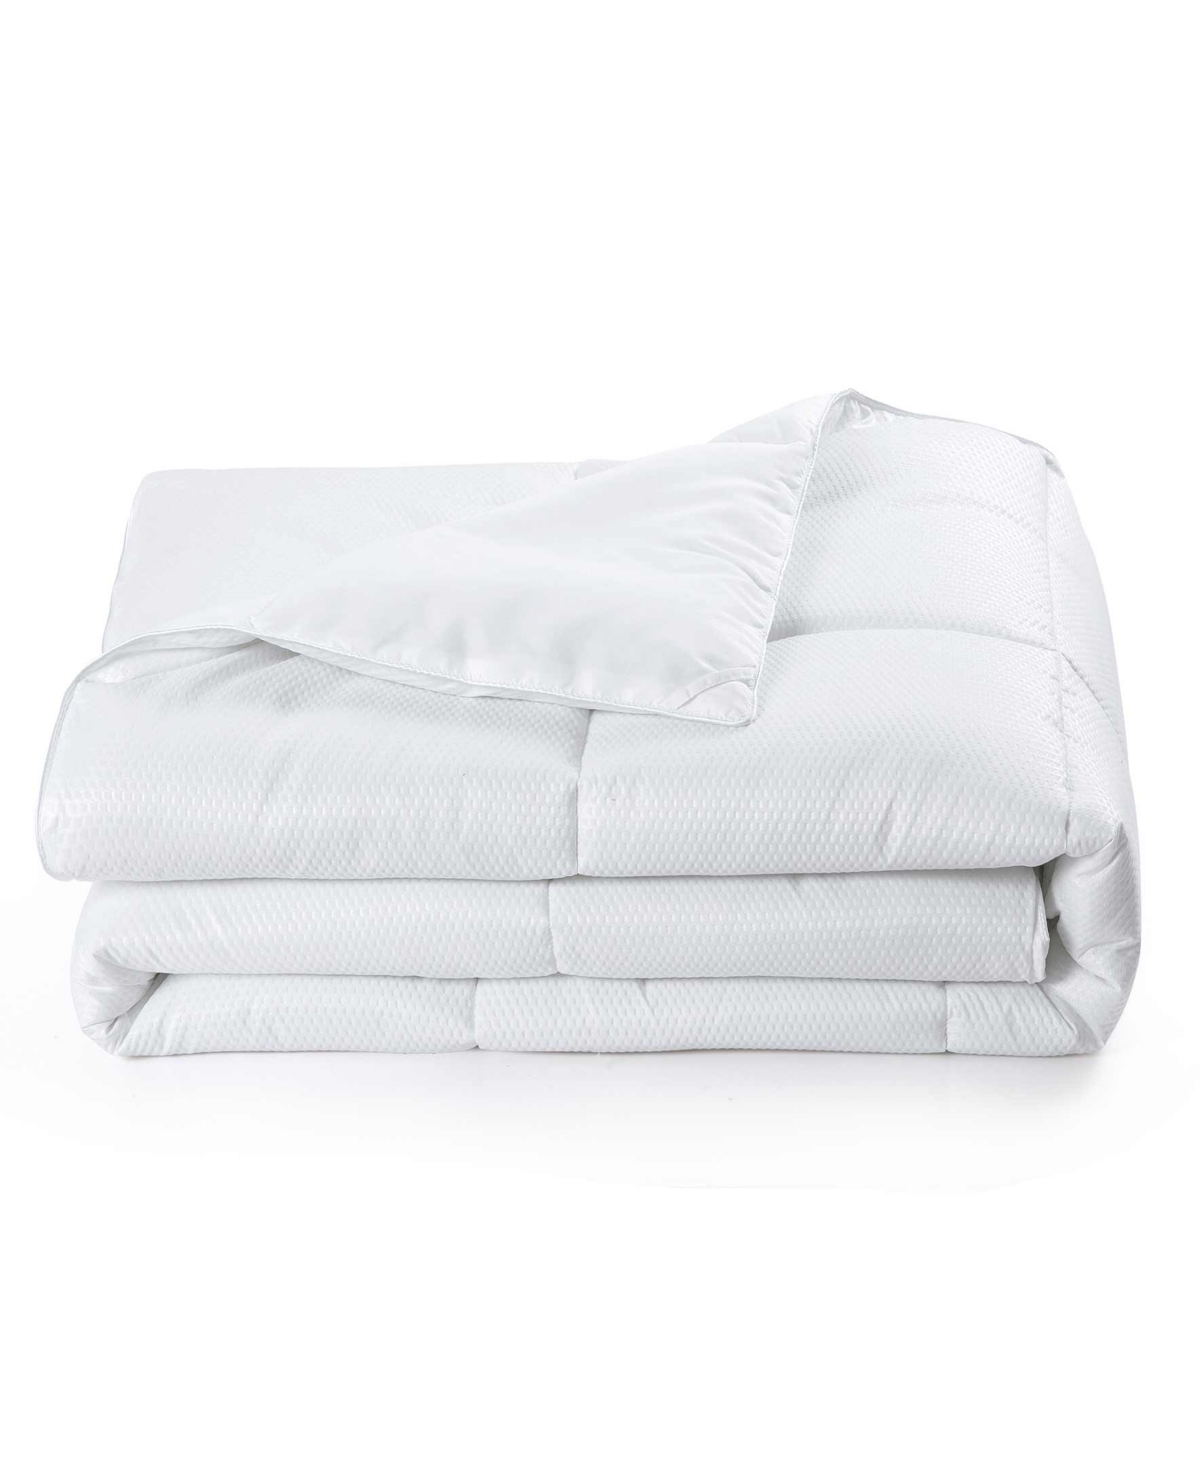 Unikome All Season Ultra Soft Classic Embossed Down Alternative Comforter, Full/queen In White